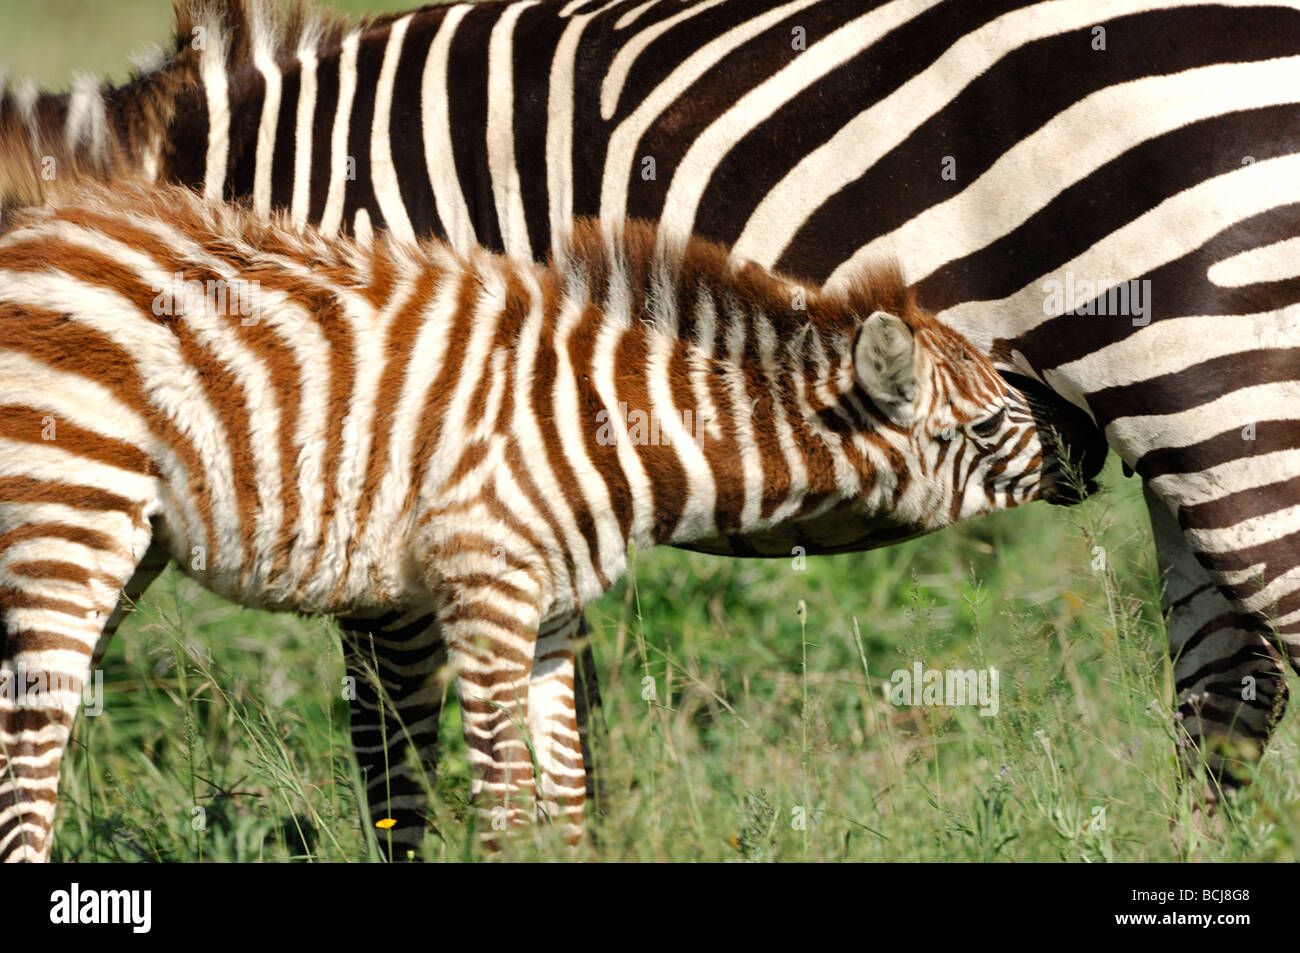 Stock Foto von einem Zebra-Fohlen, Krankenpflege, Ndutu, Tansania, Februar 2009. Stockfoto